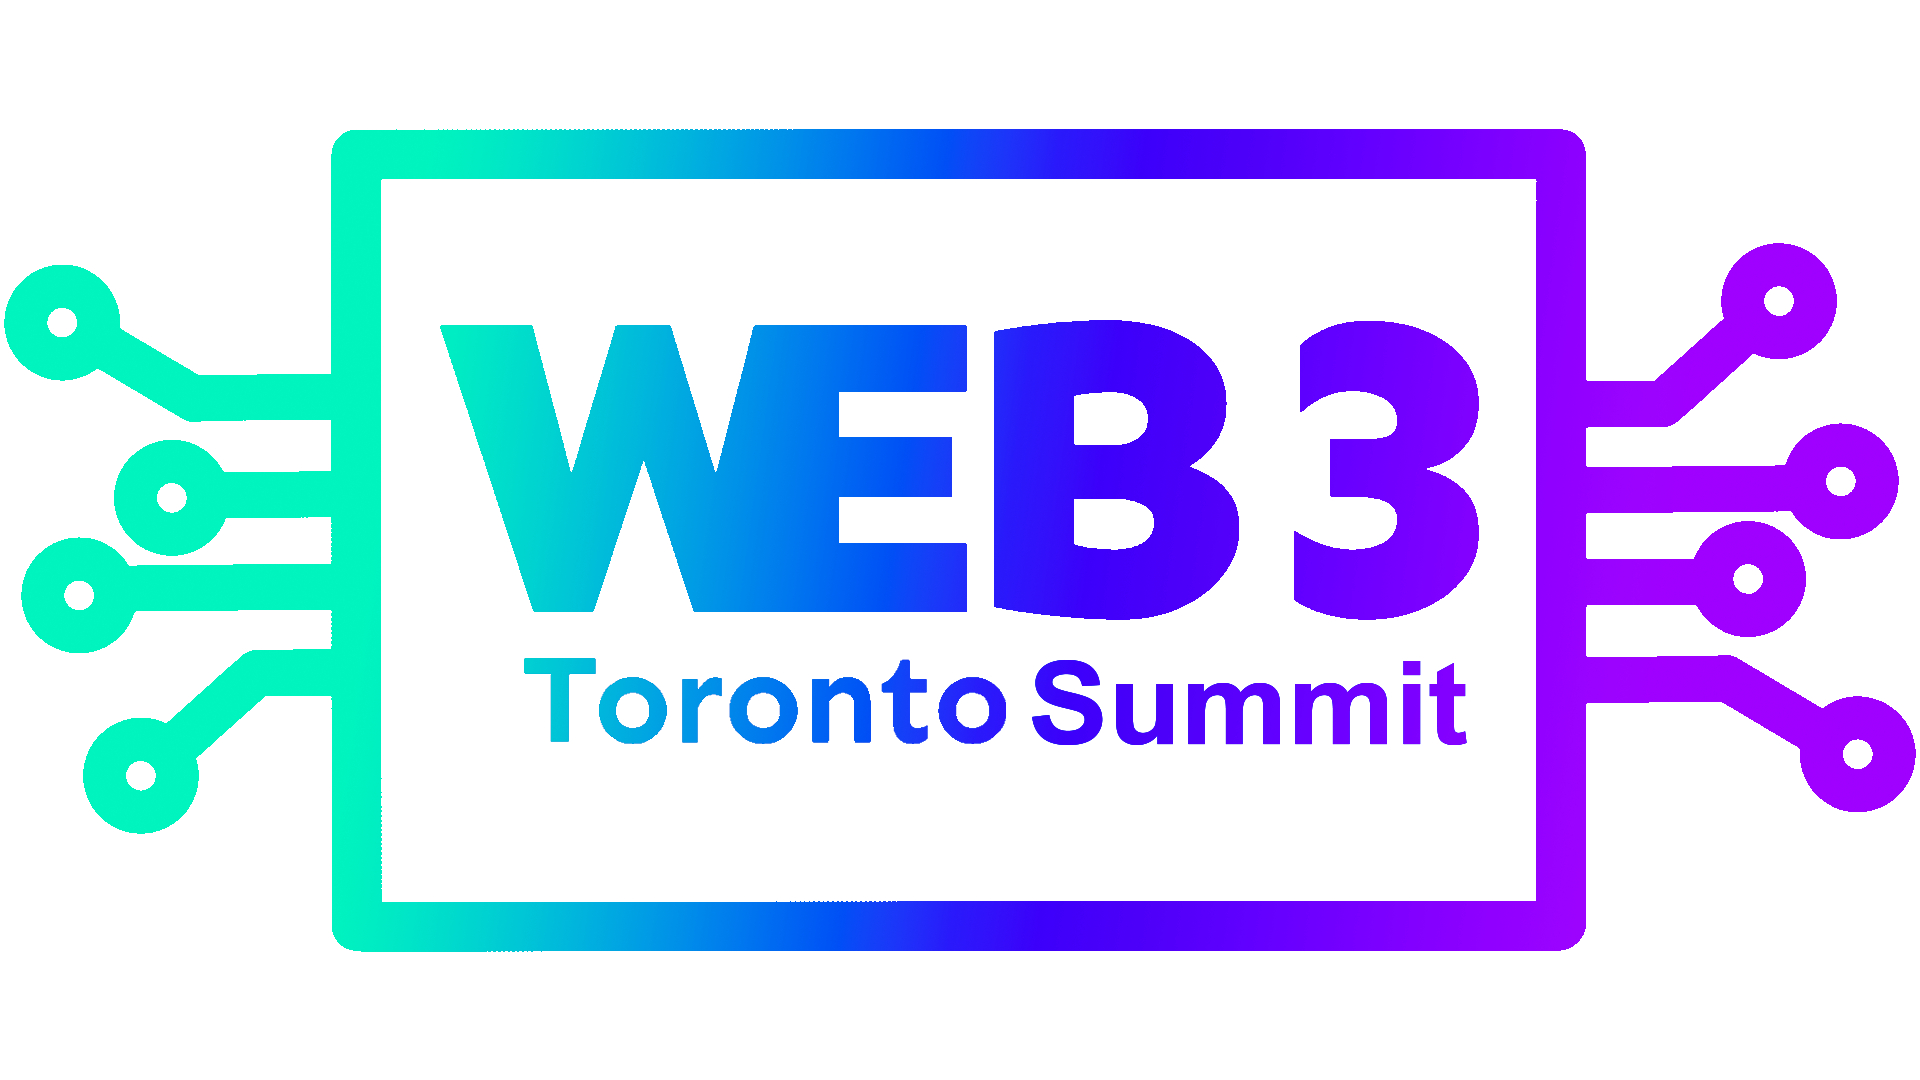 WEB3 Toronto Summit Logo